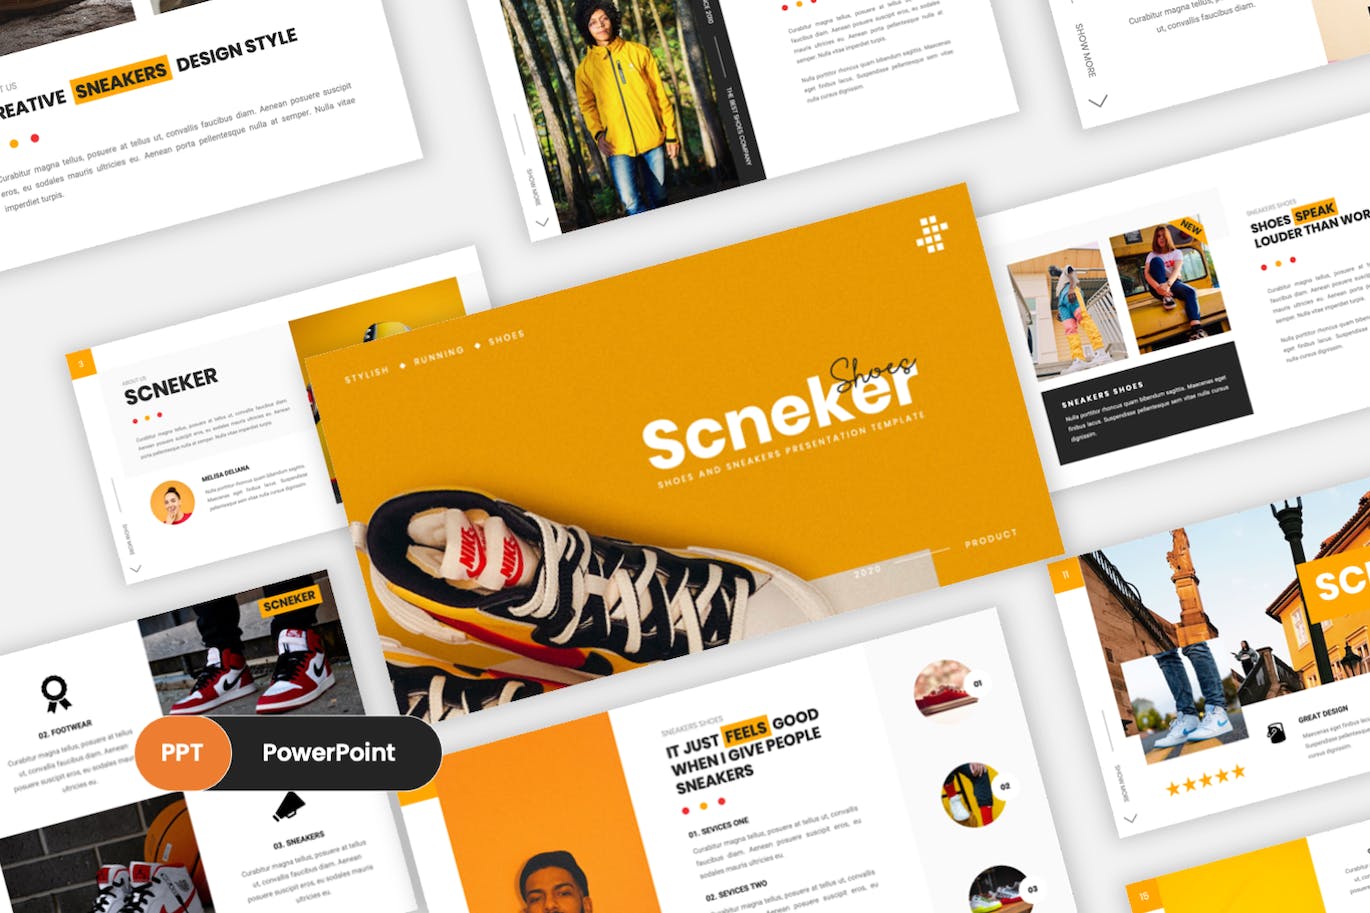 运动鞋品牌PPT幻灯片模板素材 Scneker – Shoes And Sneakers PowerPoint Template 幻灯图表 第1张